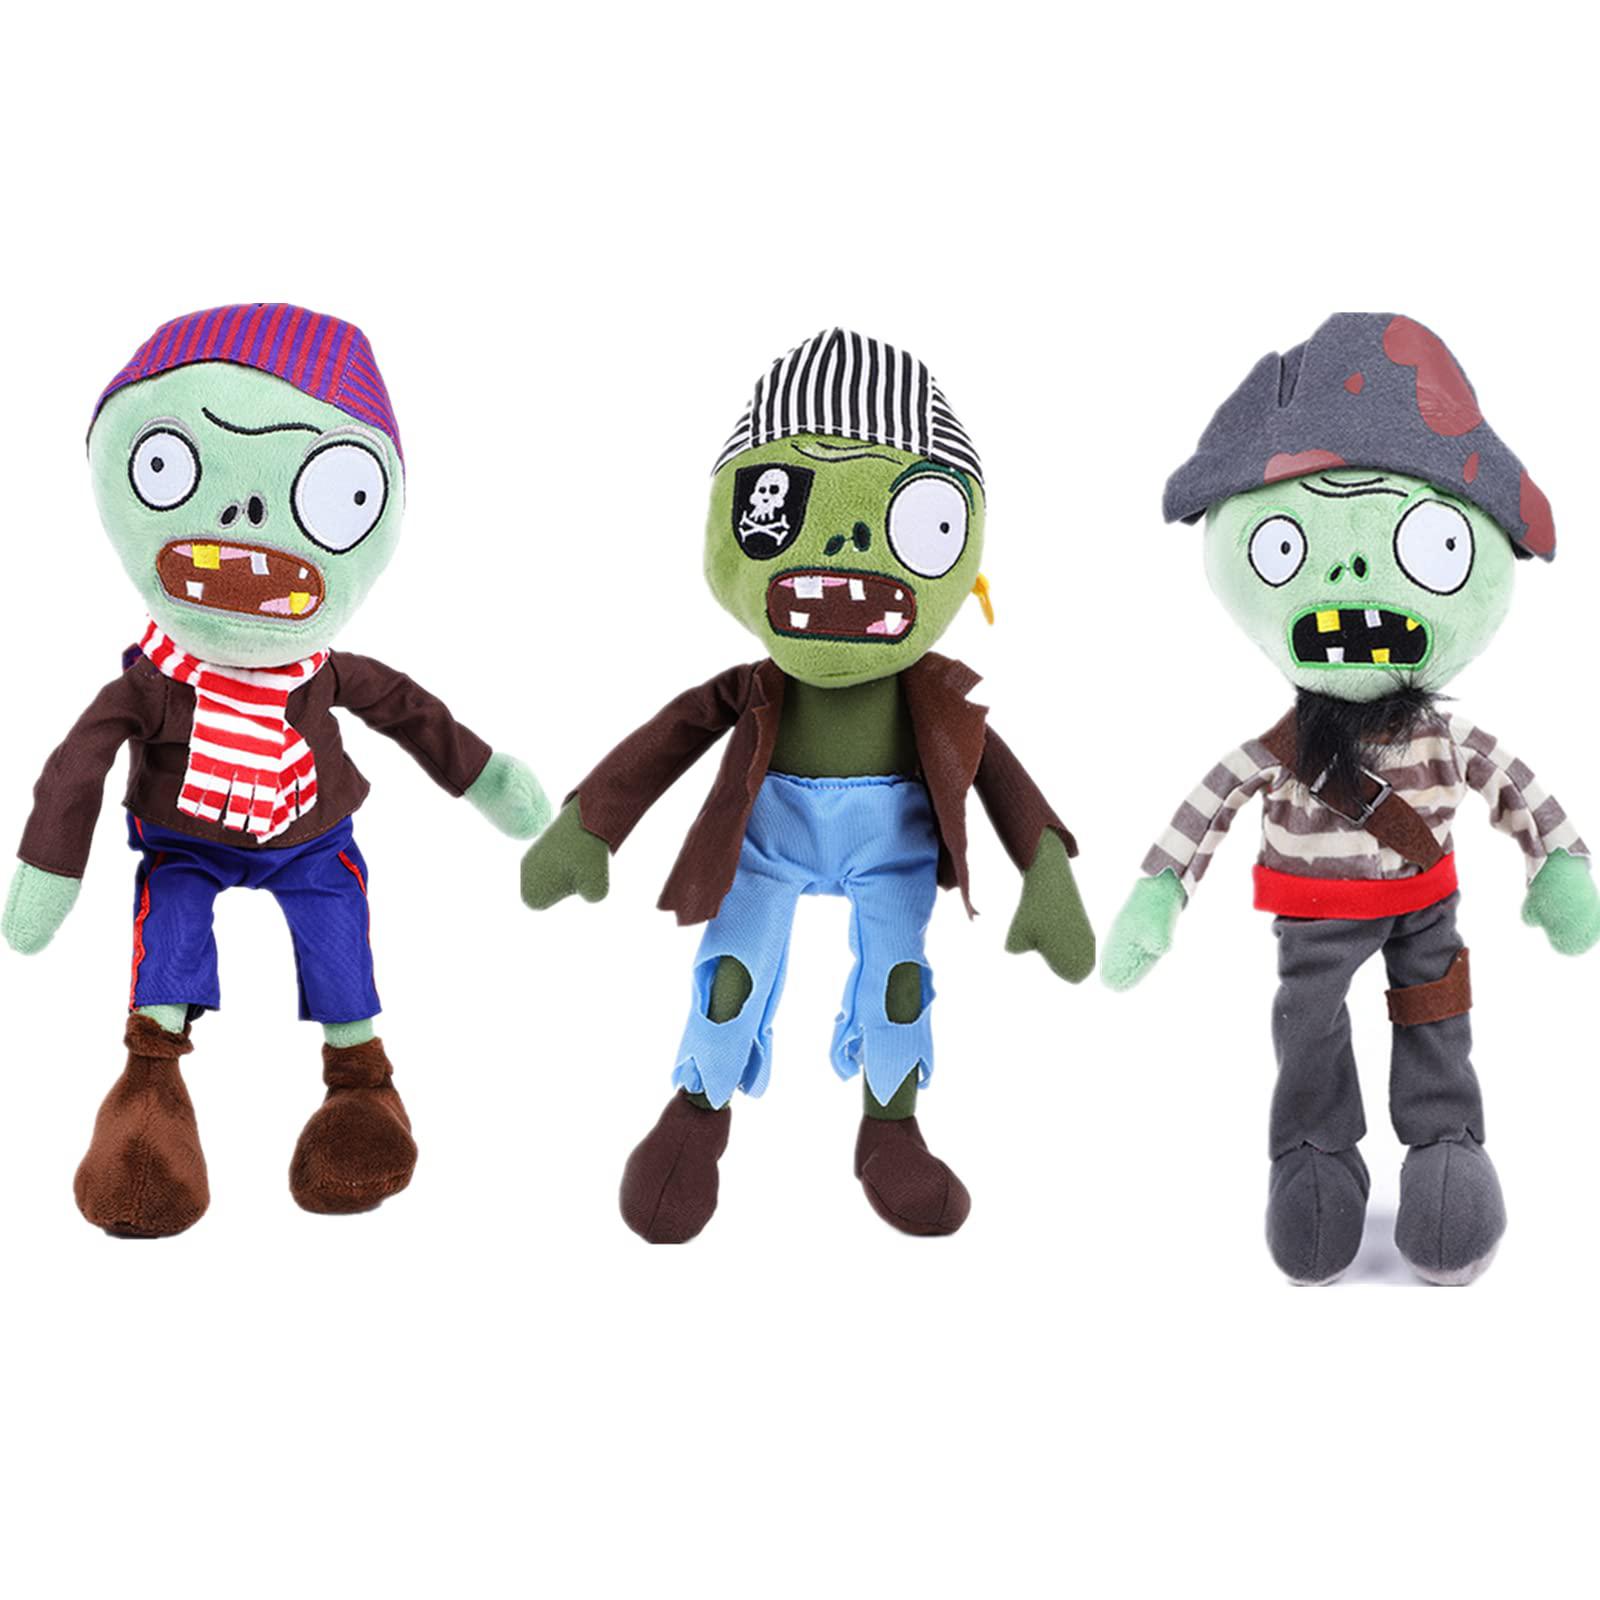 Suyudian 3 pcs pvz plush sets toys stuffed soft plant figure doll swashbuckler zombie , pirate zombie, new pirate zombie great gift fo